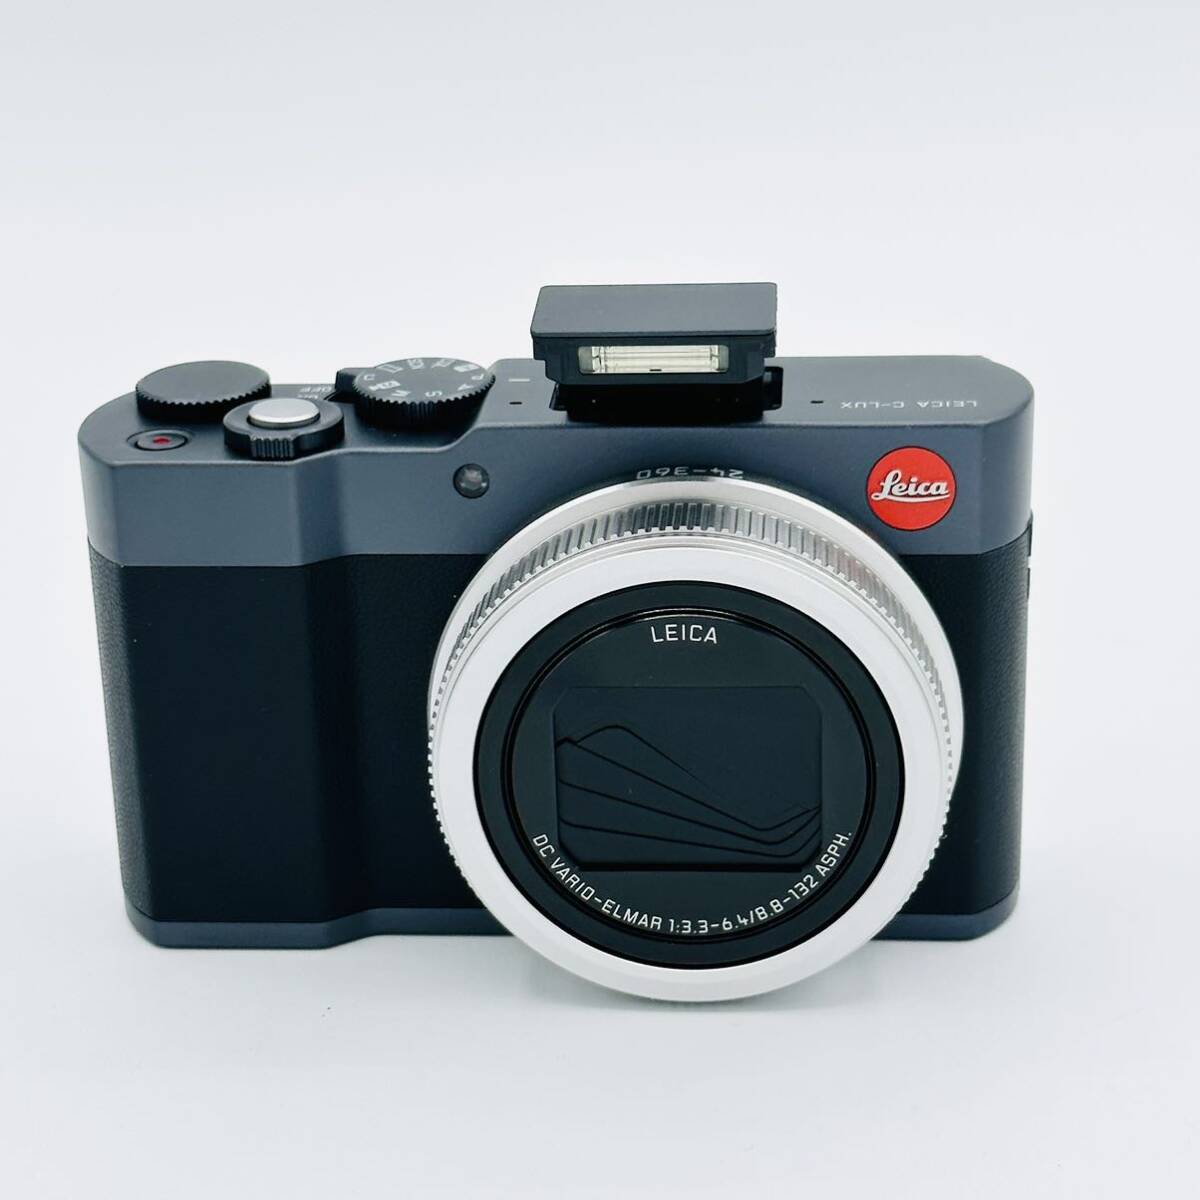 [ почти новый ]Leica Leica C-LUX midnight голубой 19130